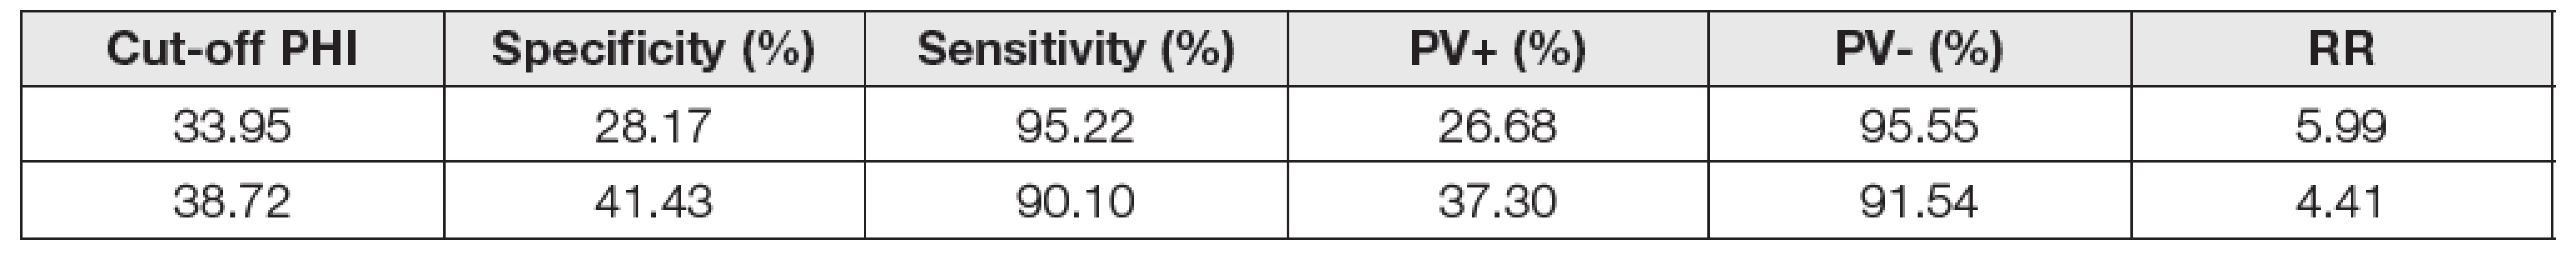 Cut-off PHI based on the post-operative Gleason score (GS6 vs GS≥7).